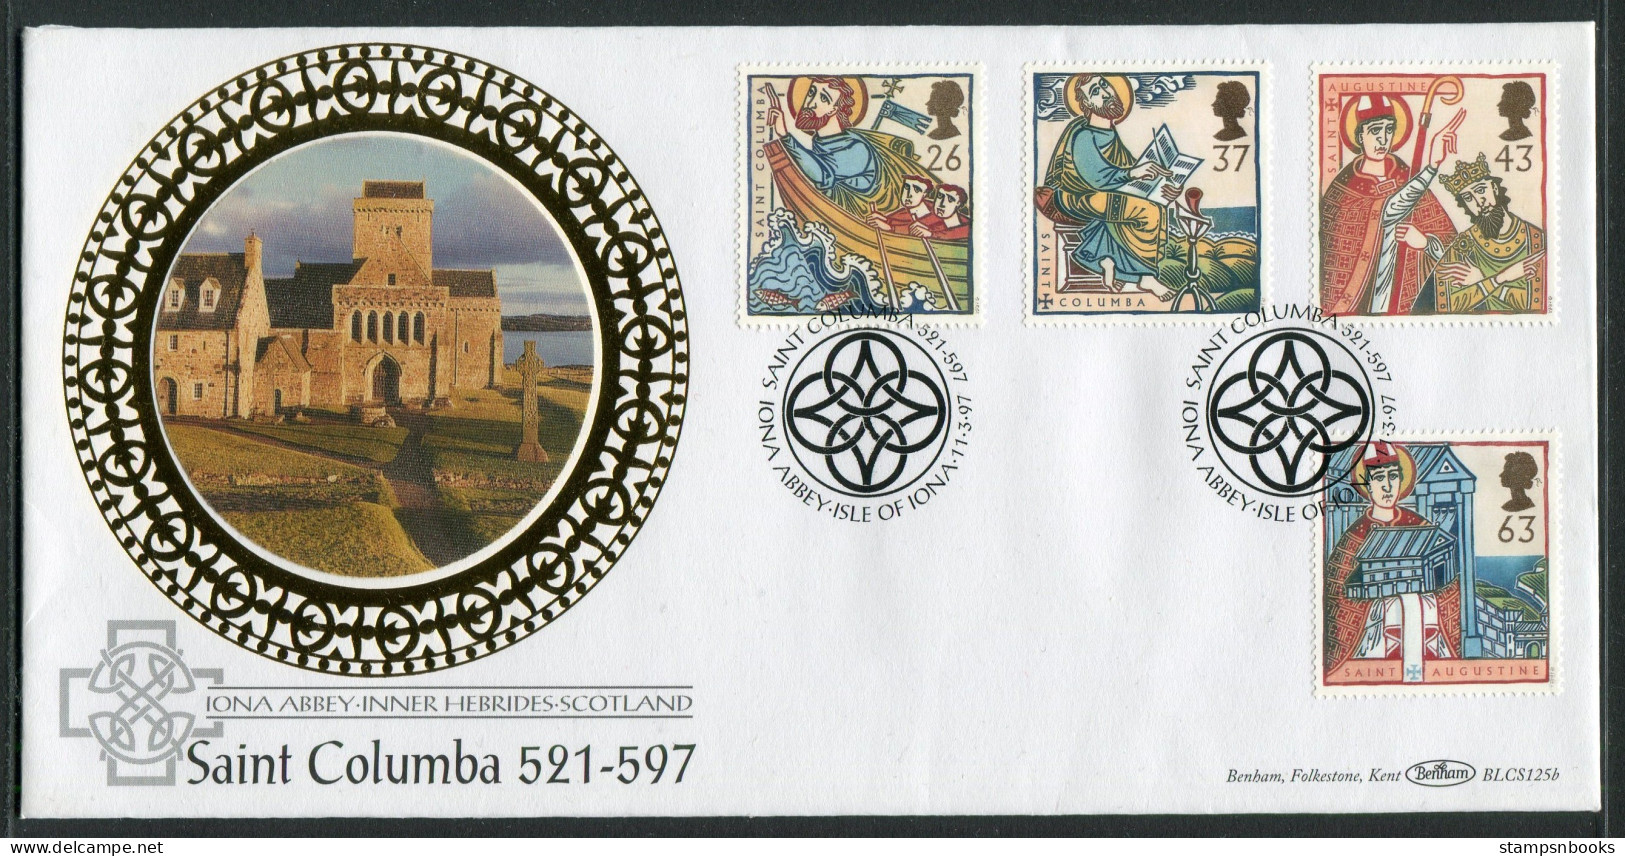 1997 GB Missions Of Faith First Day Cover, Saint Columba, Iona Abbey, Scotland Benham BLCS 125b FDC - 1991-2000 Decimal Issues